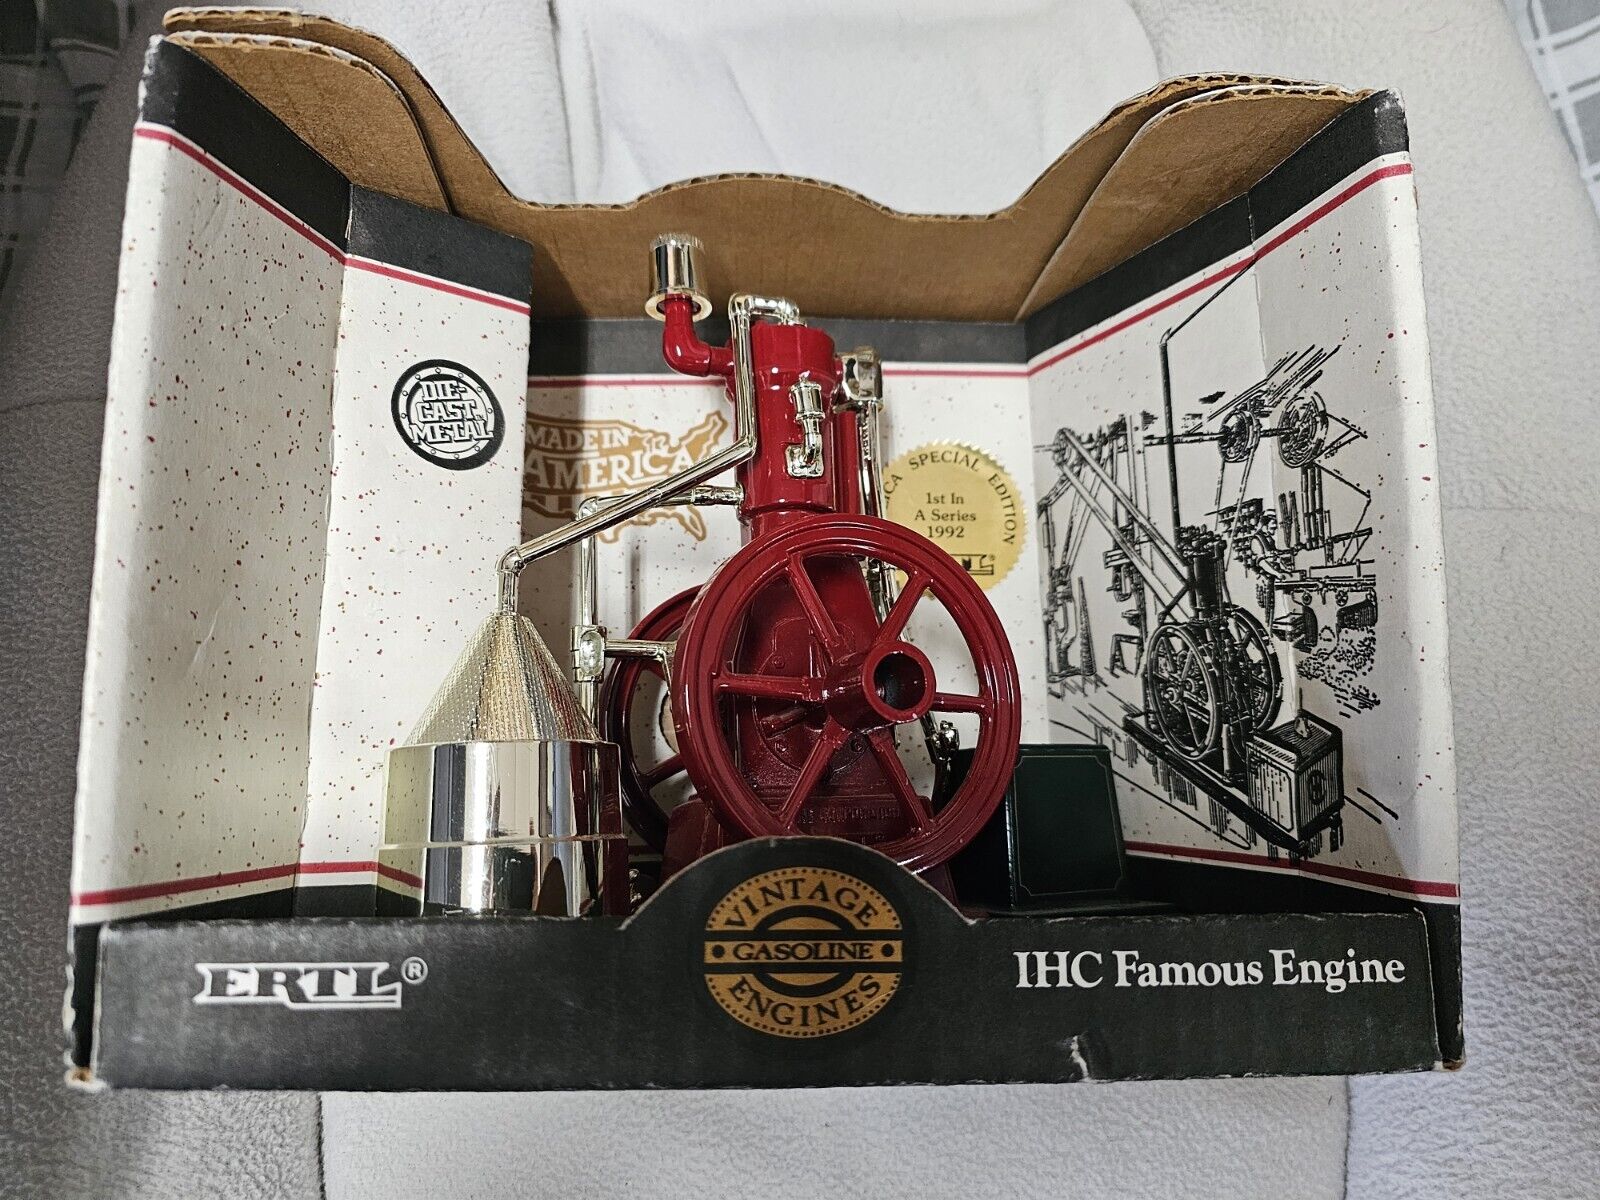 International Ihc Famous Engine